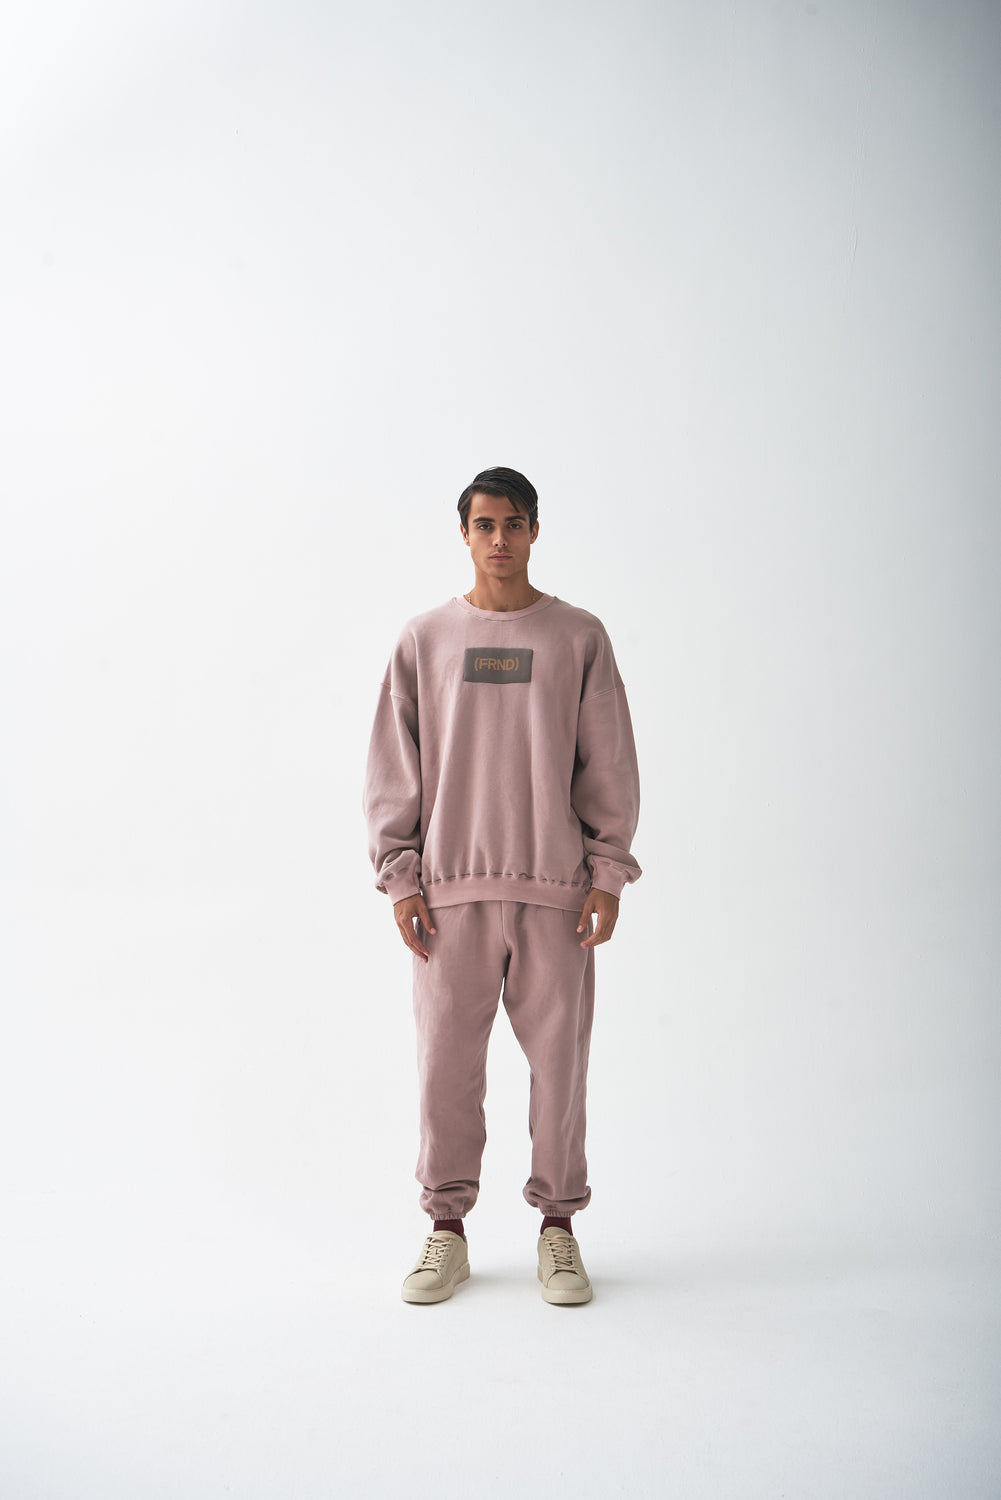 (FRND) Sweatshirt Dusty Pink